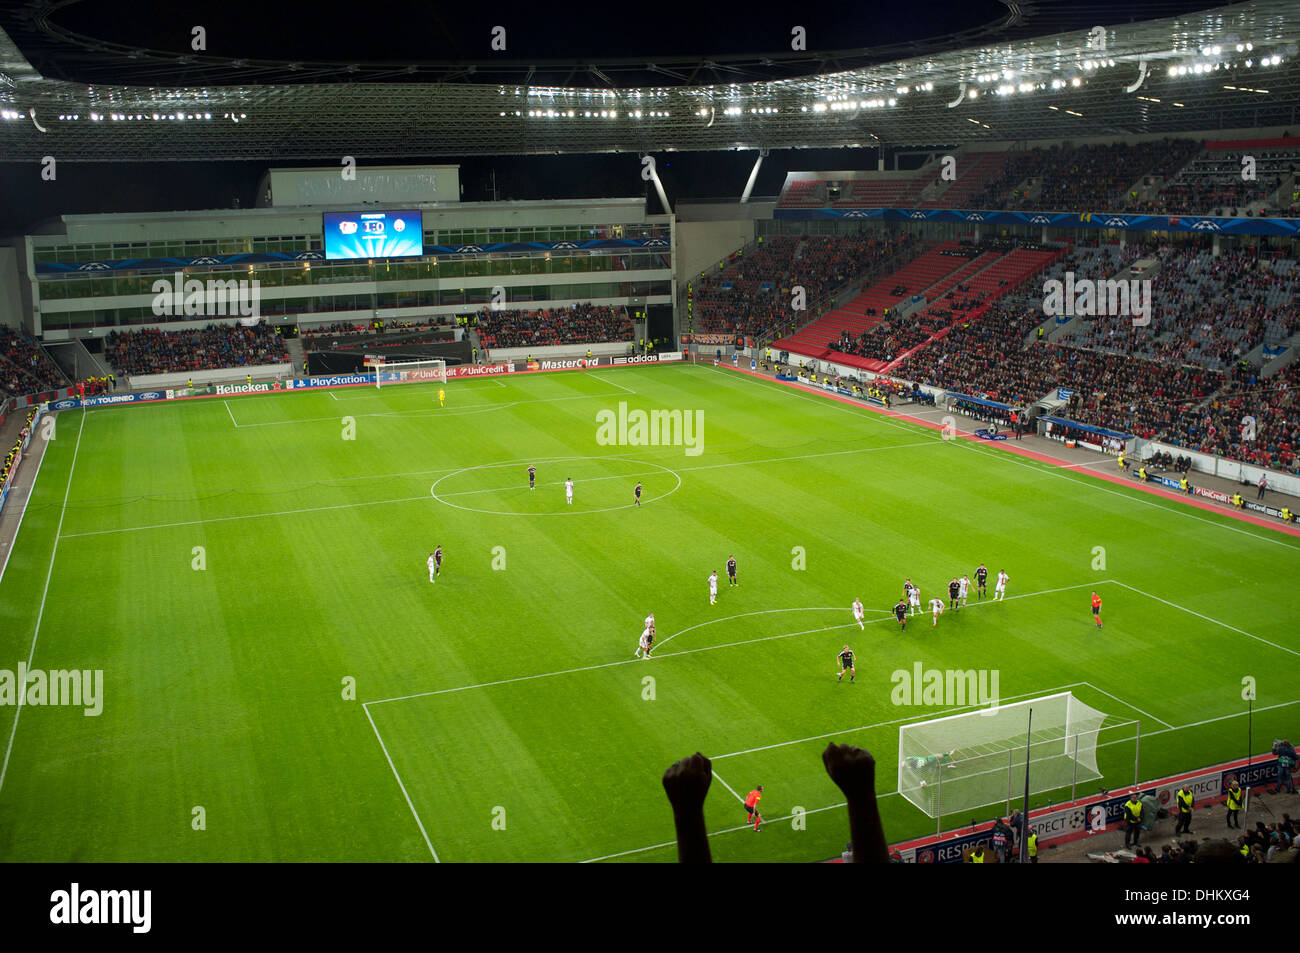 Leverkusen v Shakhtar Donetsk (Champions League 23.10.2013) Stock Photo